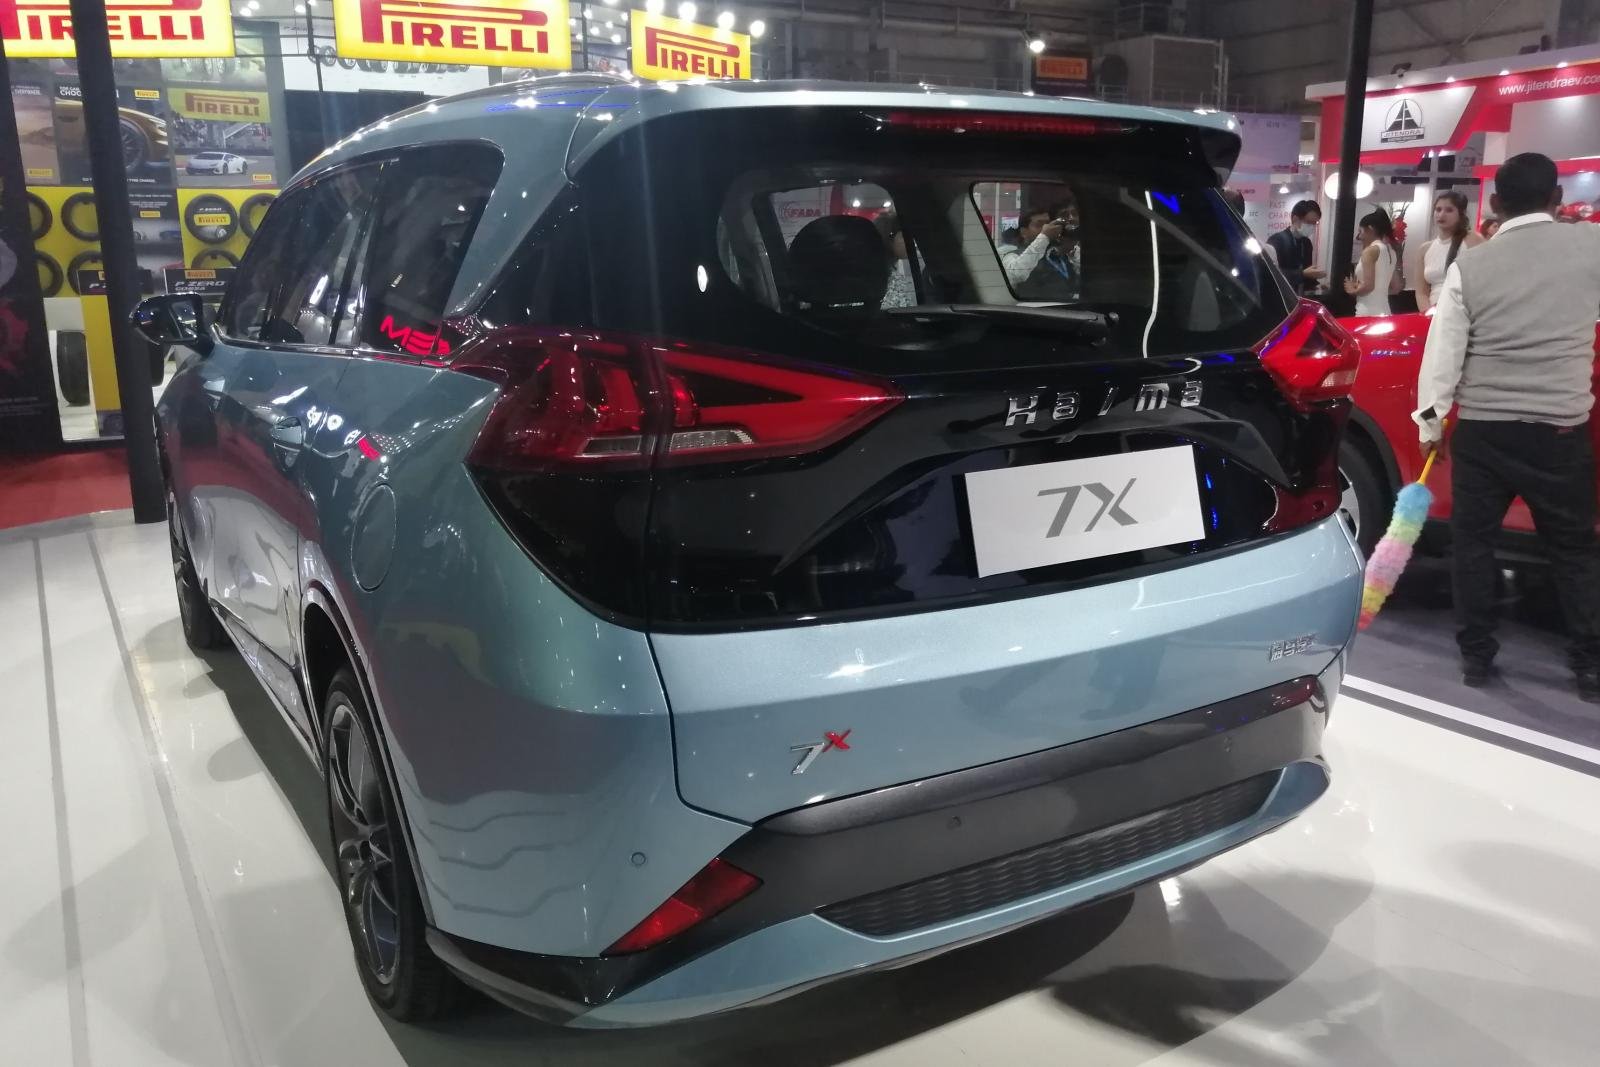 Haima 7X showcased Auto Expo 2020